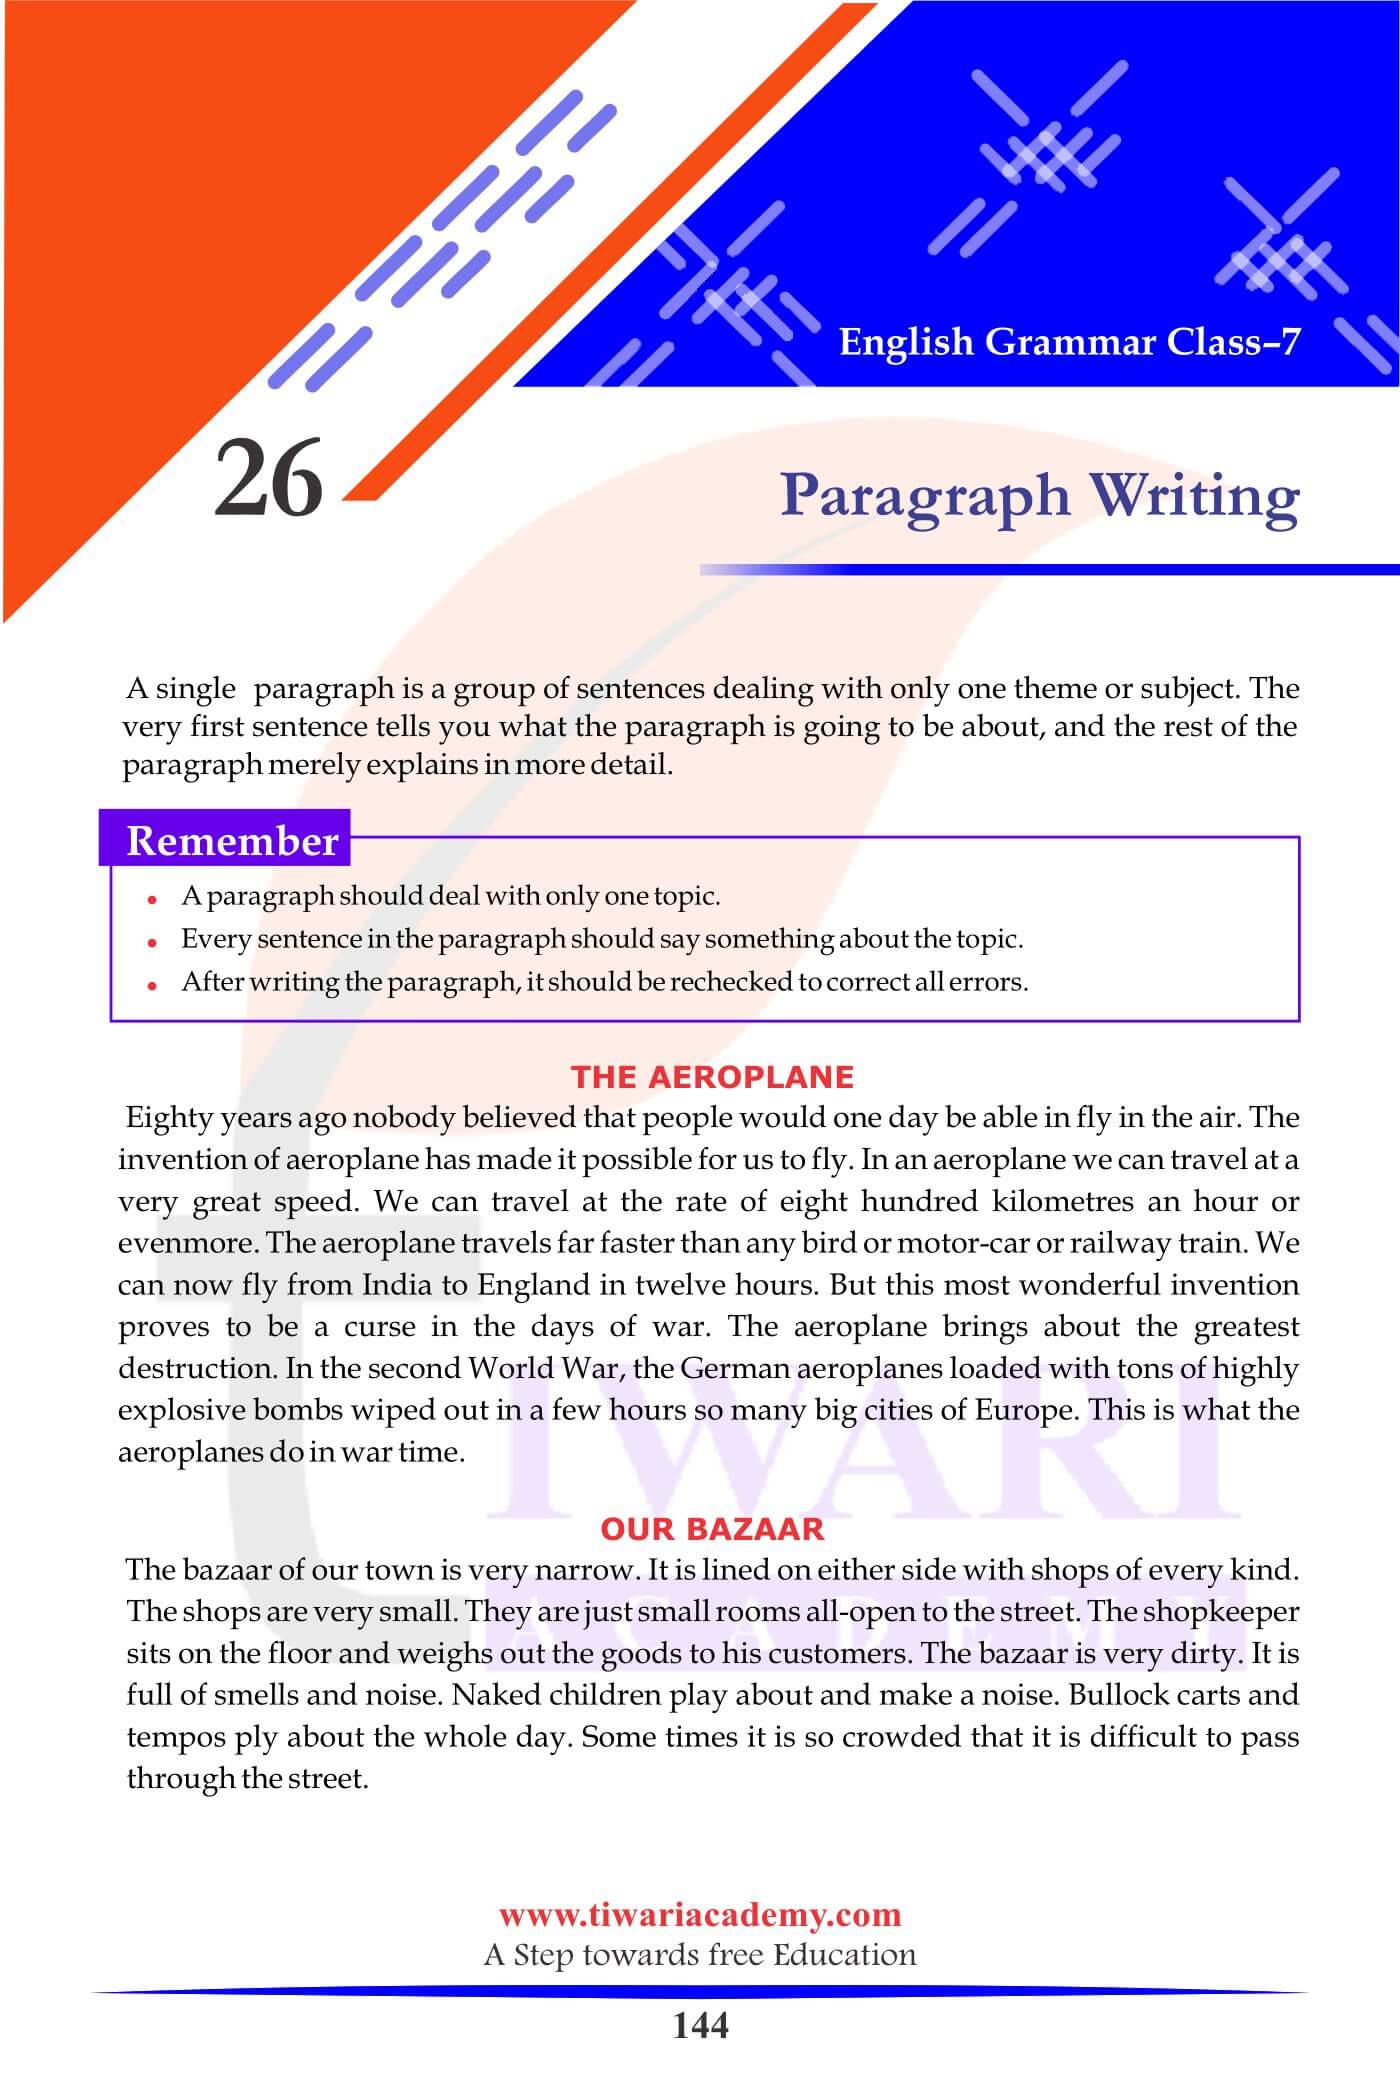 Class 7 English Grammar Paragraph Writing